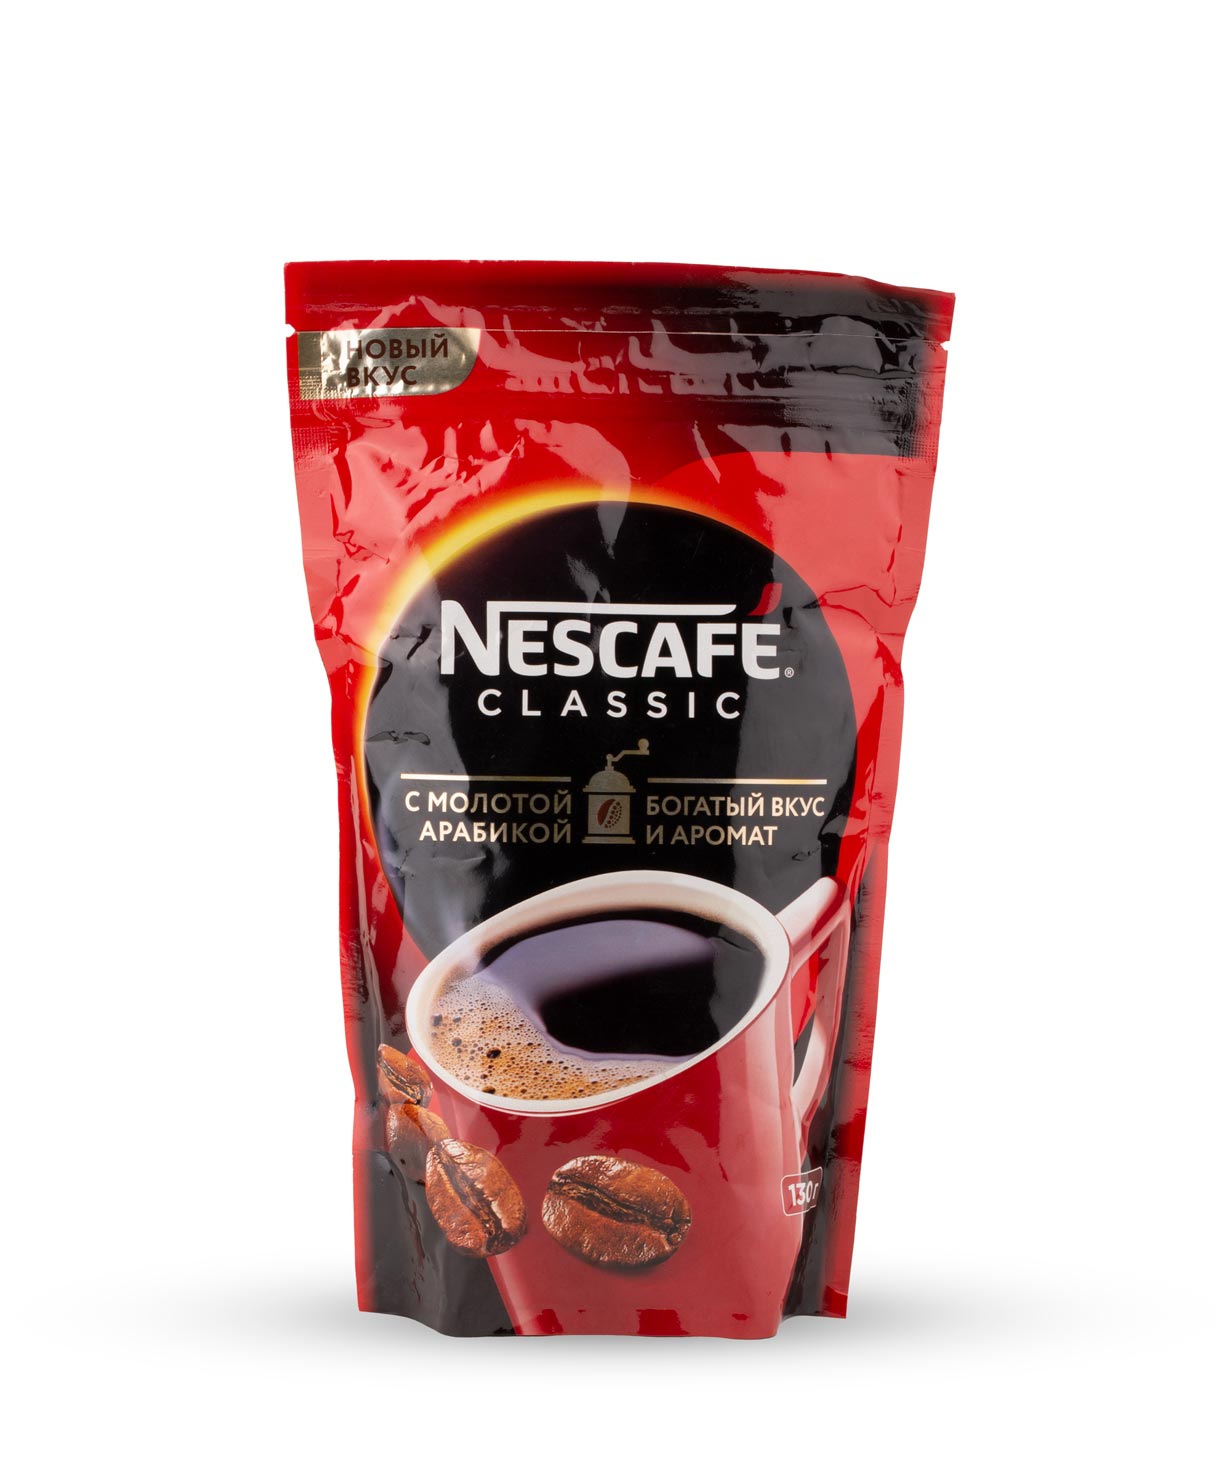 Սուրճ լուծվող «Nescafe Classic»